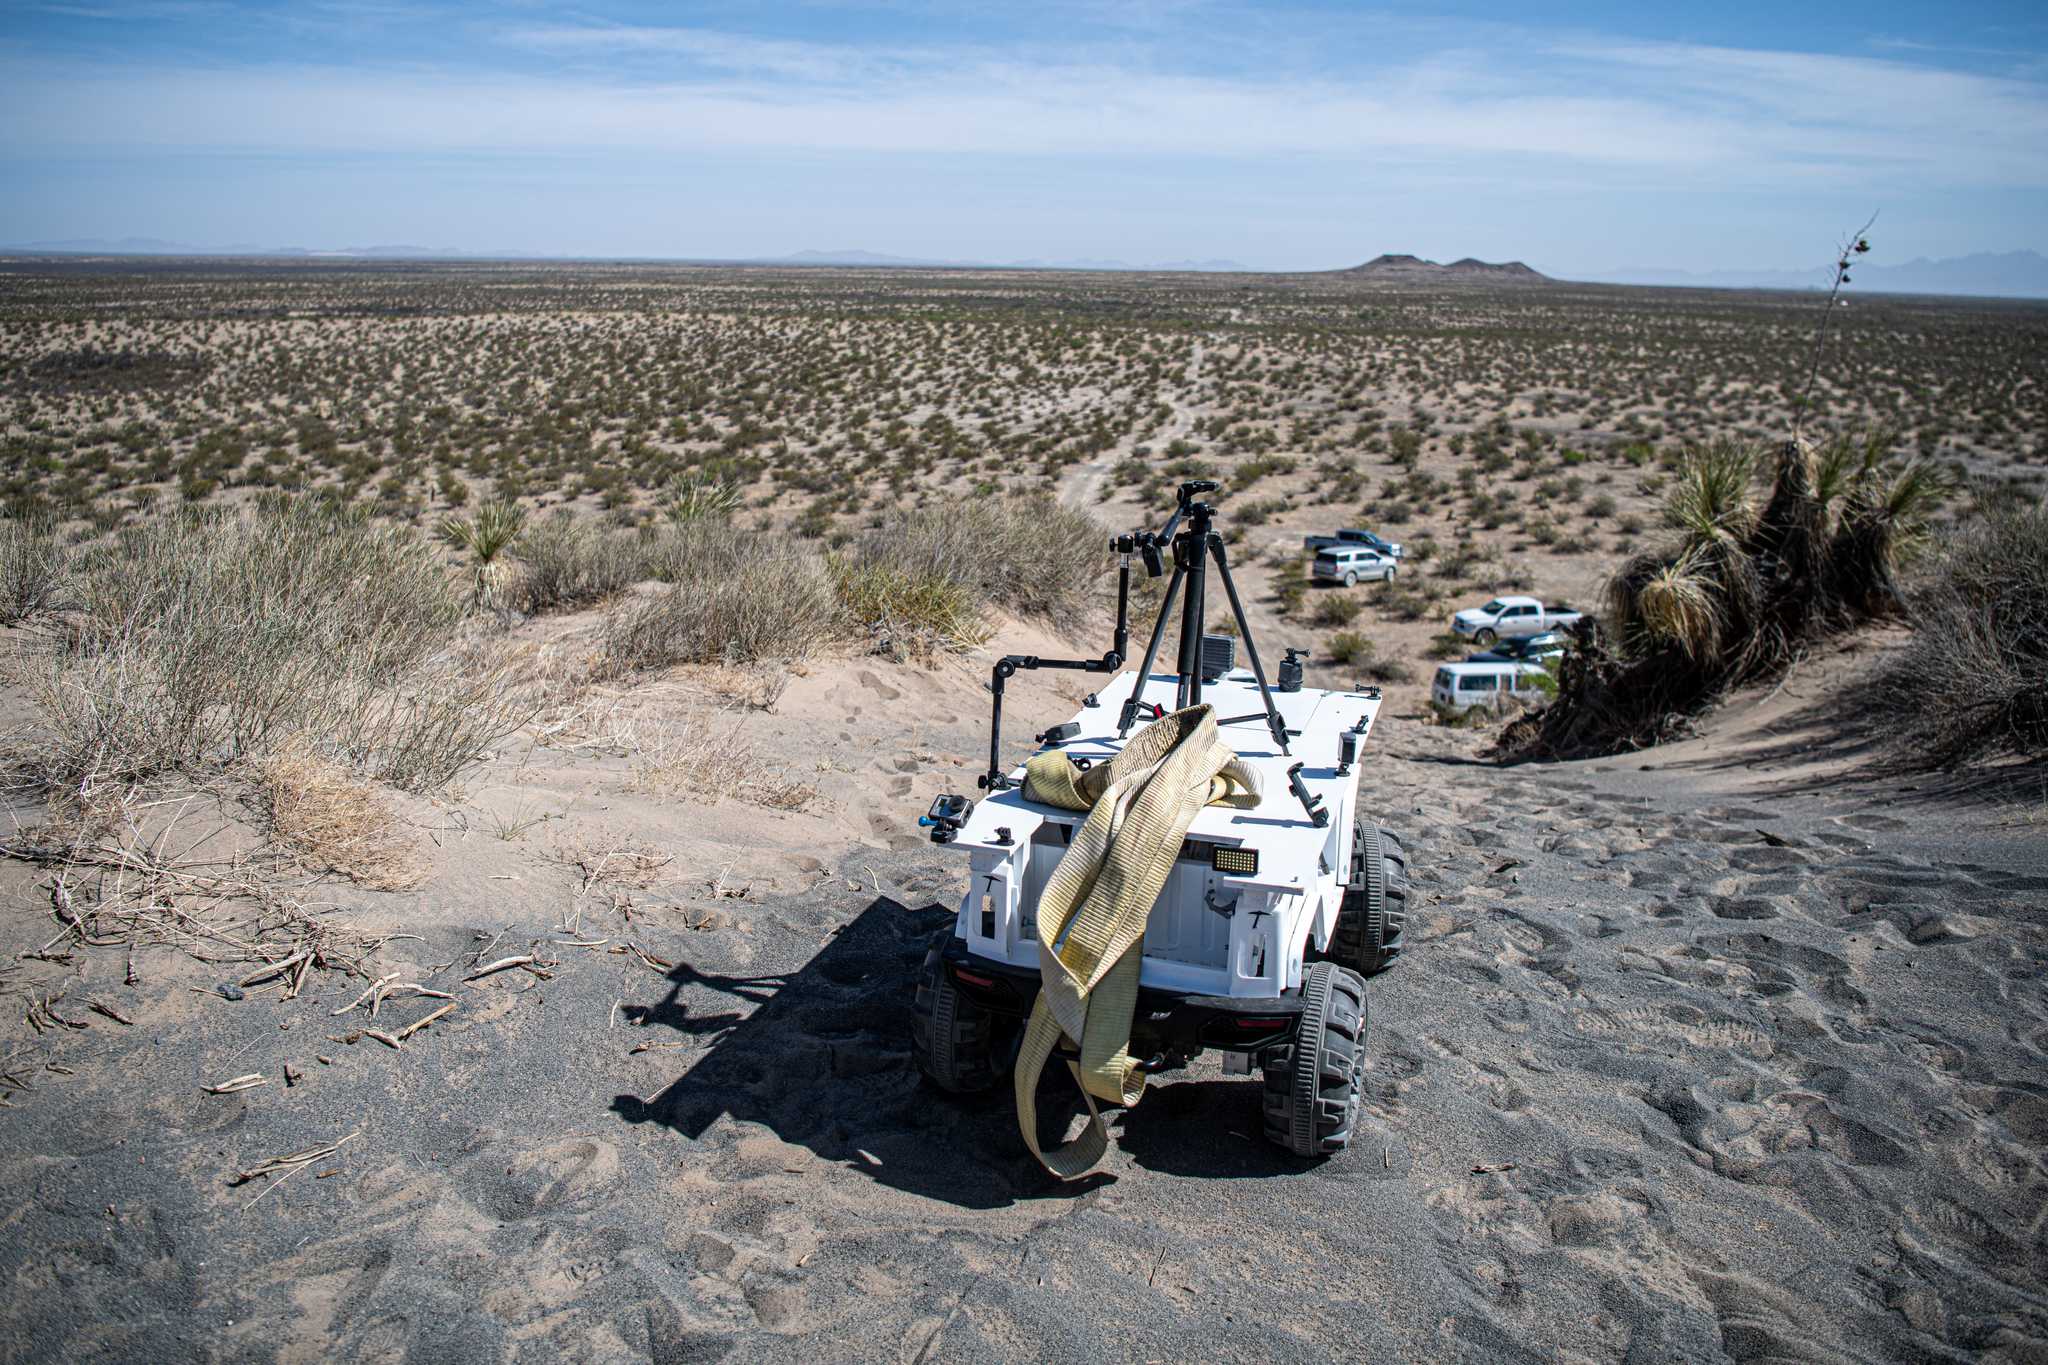 Moon rover at Potrillo Volcanic Field in New Mexico, April 2022